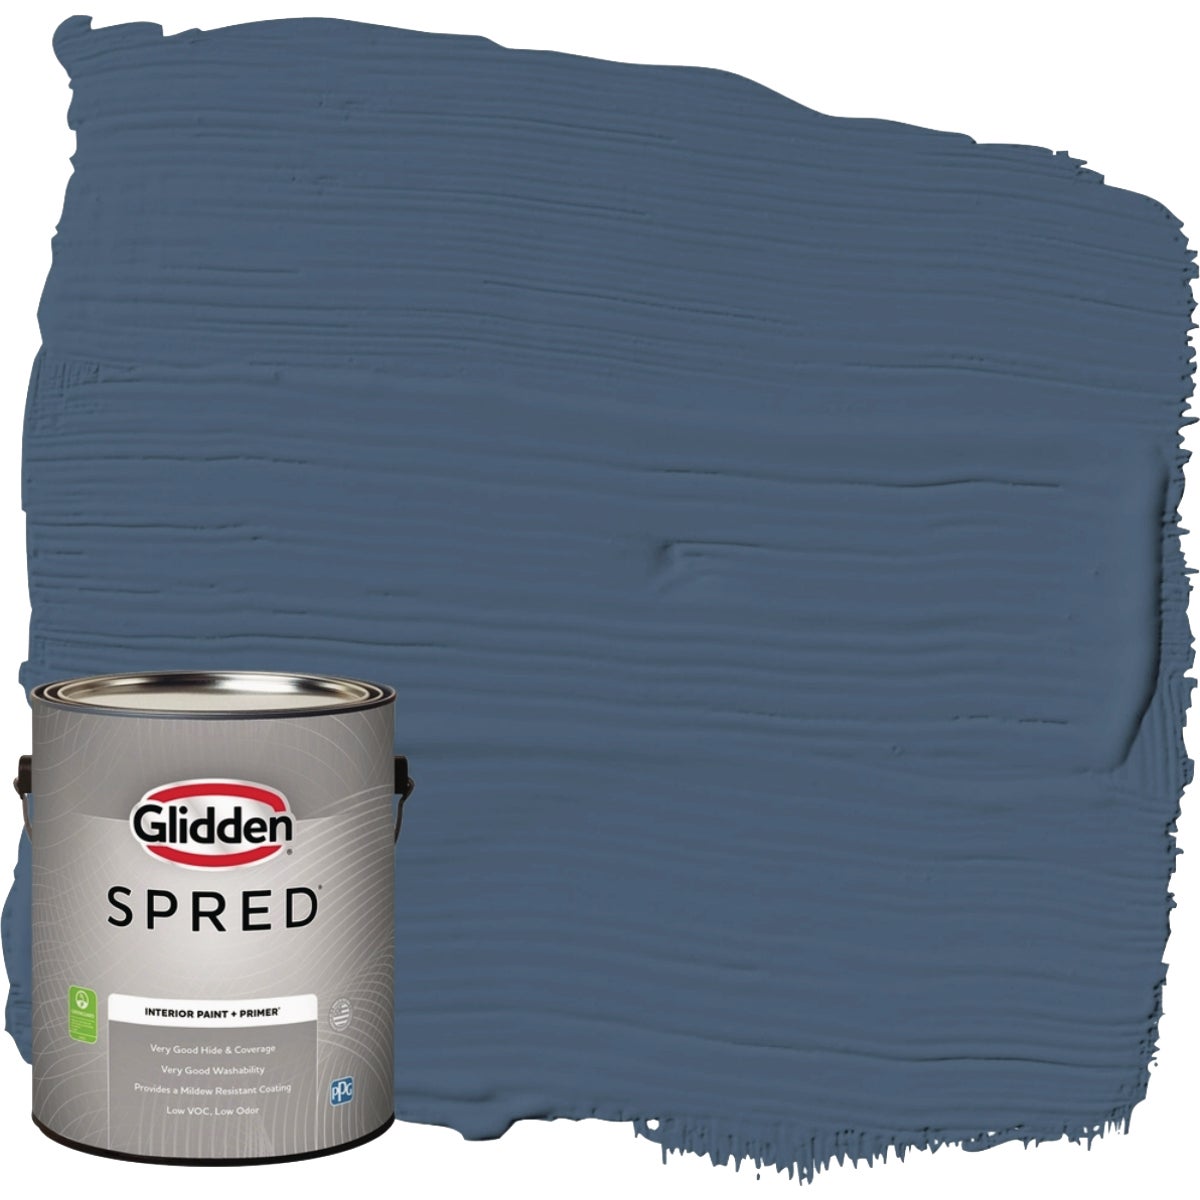 Glidden Spred Interior Grab-N-Go Paint + Primer Eggshell Paint, Blue Fjord, 1 Gal.